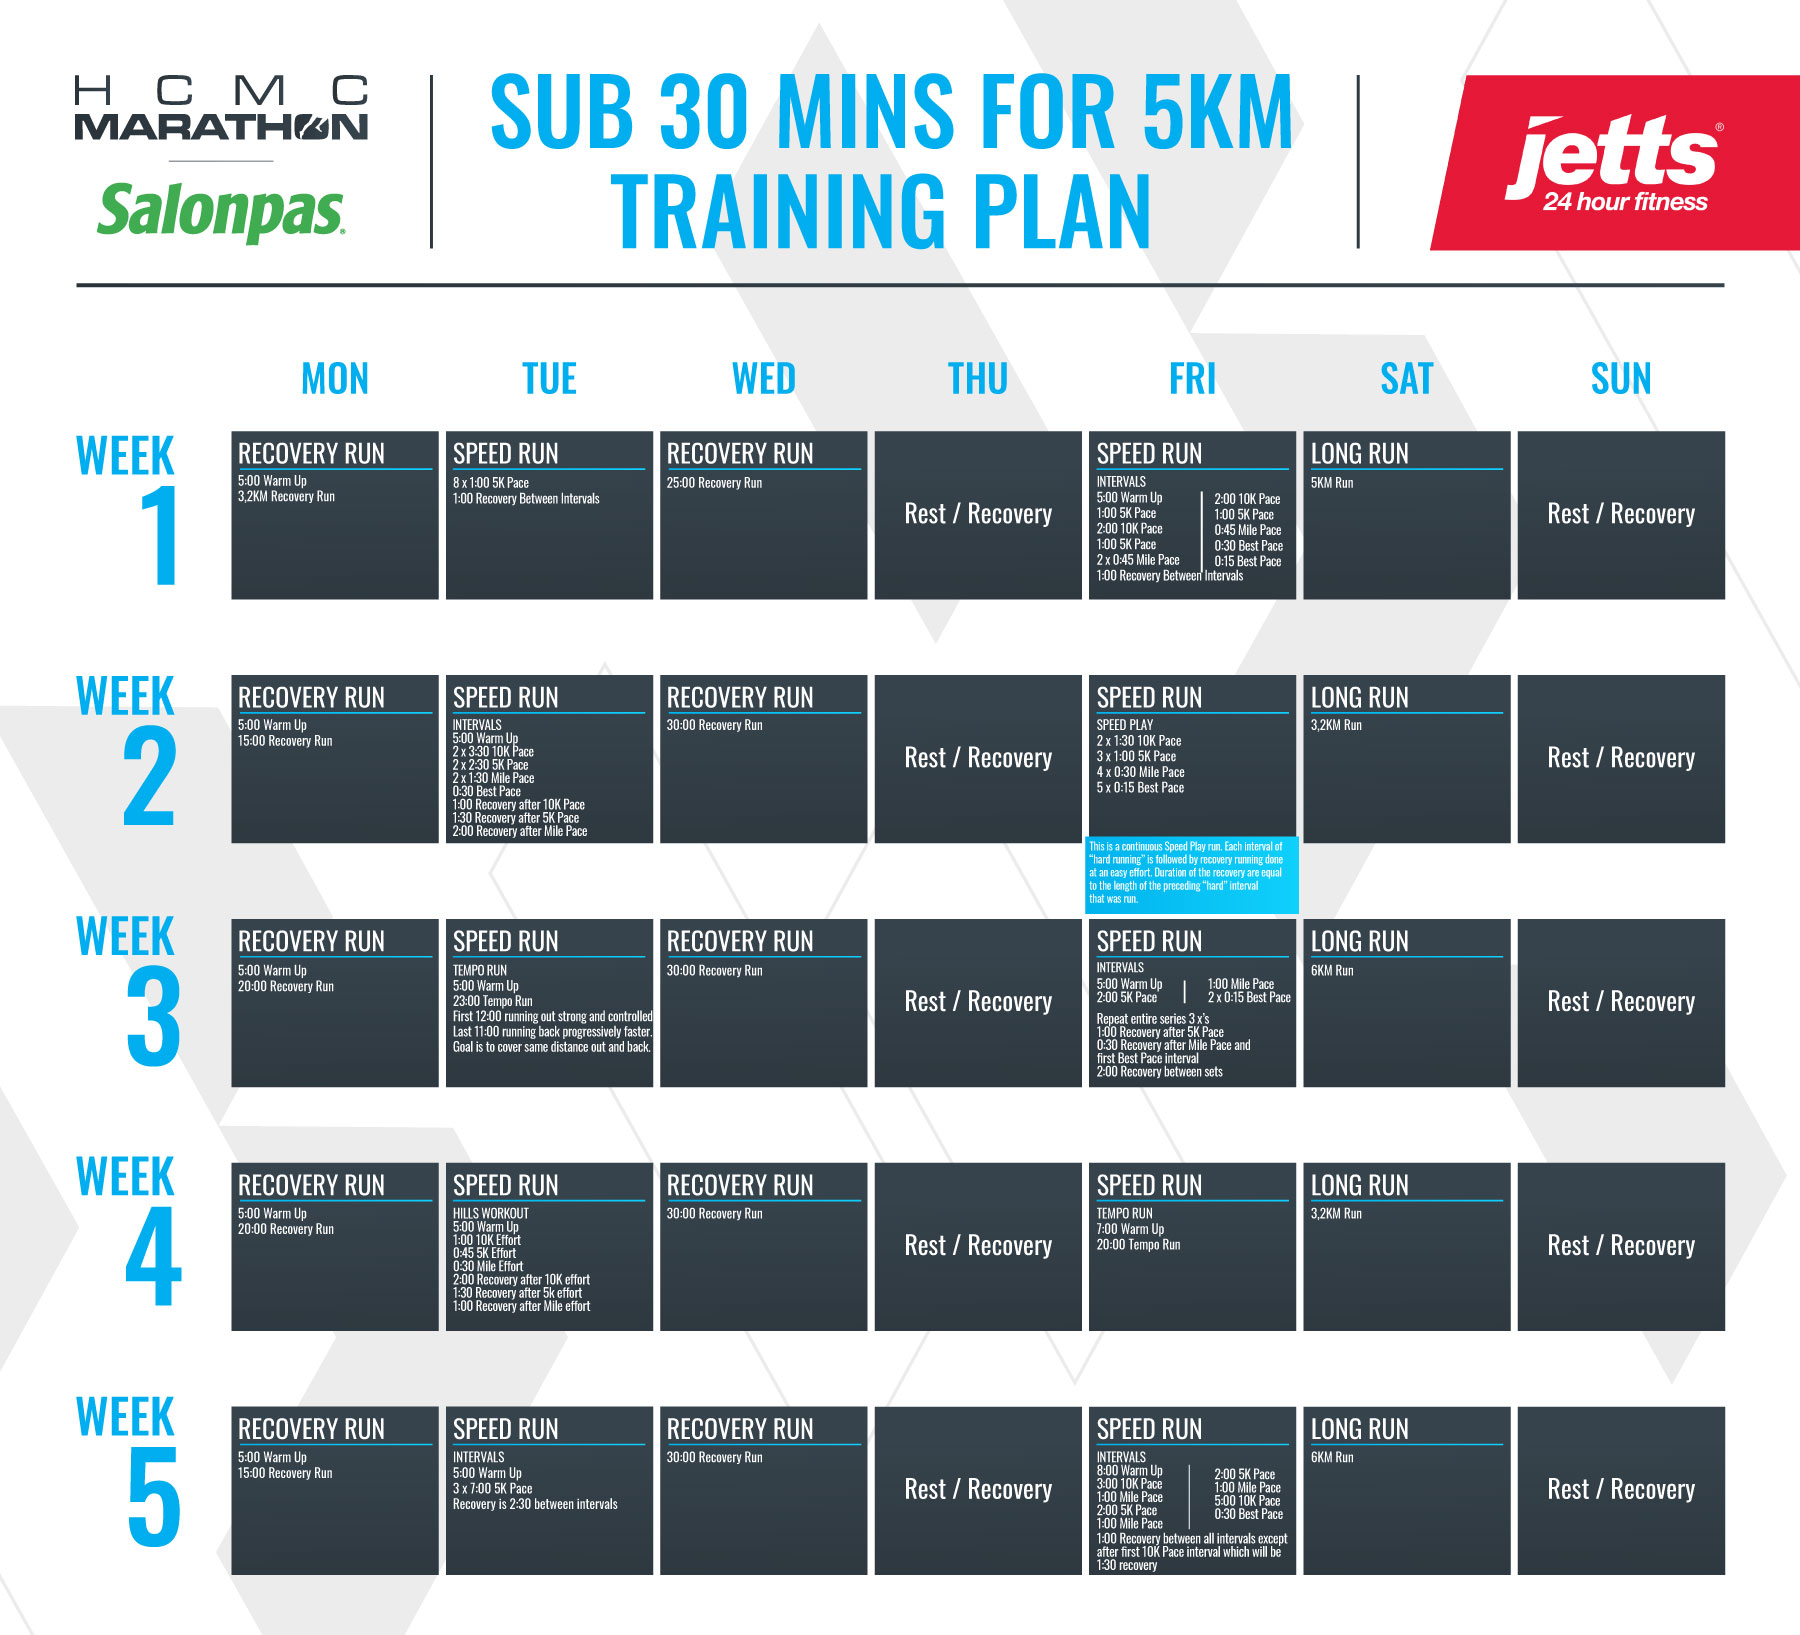 Mission Marathon Training Plan: sub-5 hours